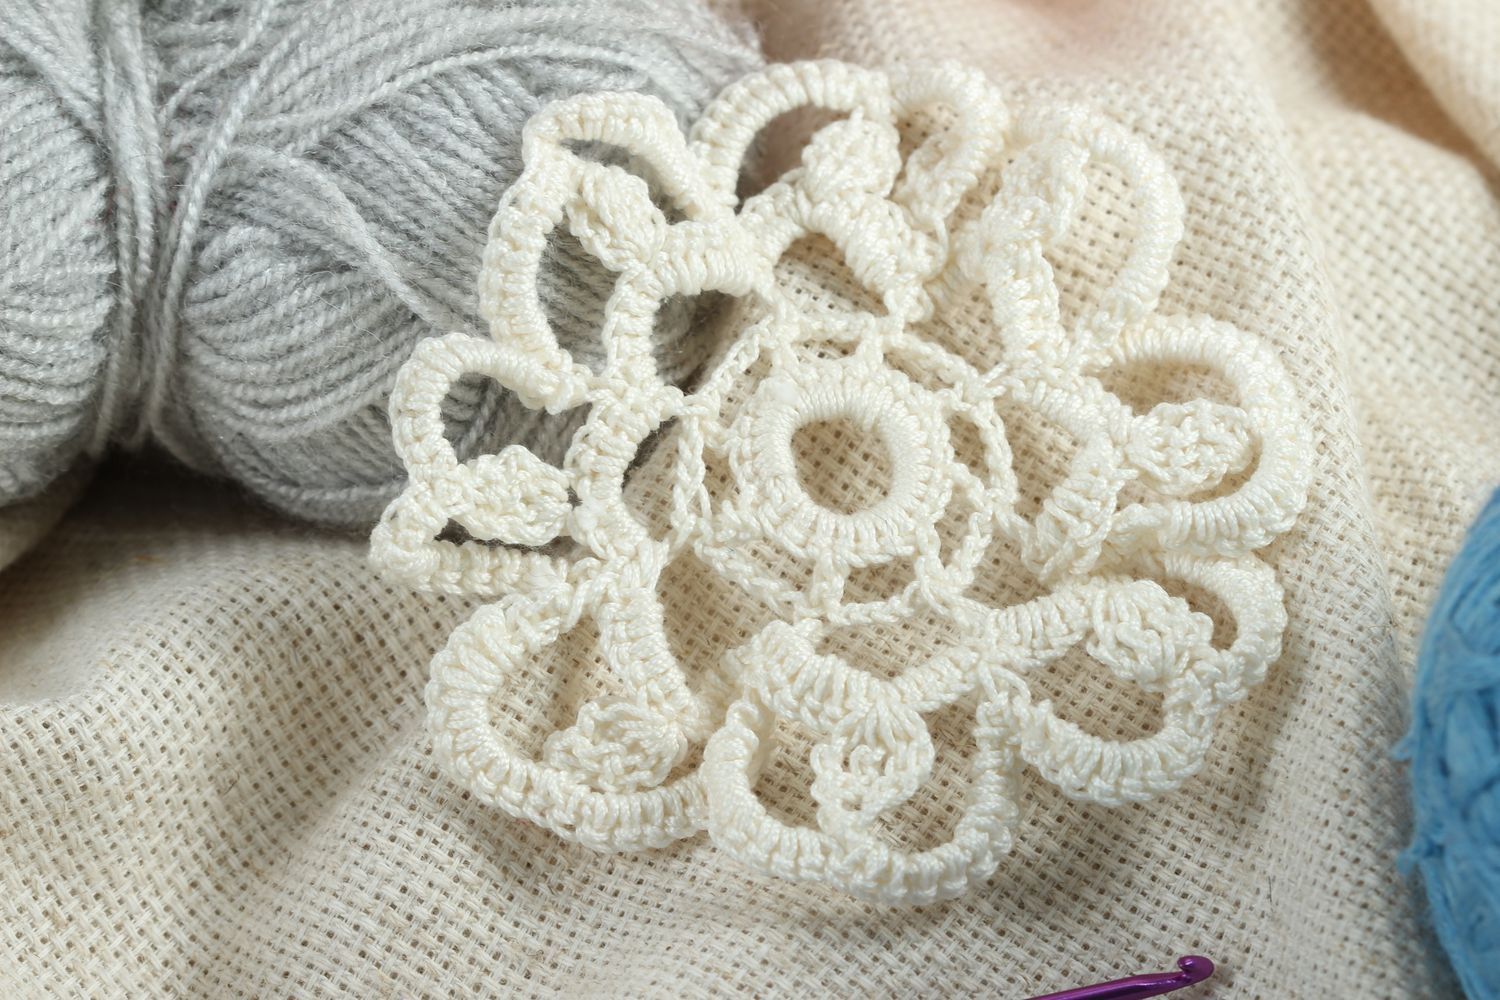 Crochet flower jewelry supplies handmade decorative flowers craft supplies photo 1